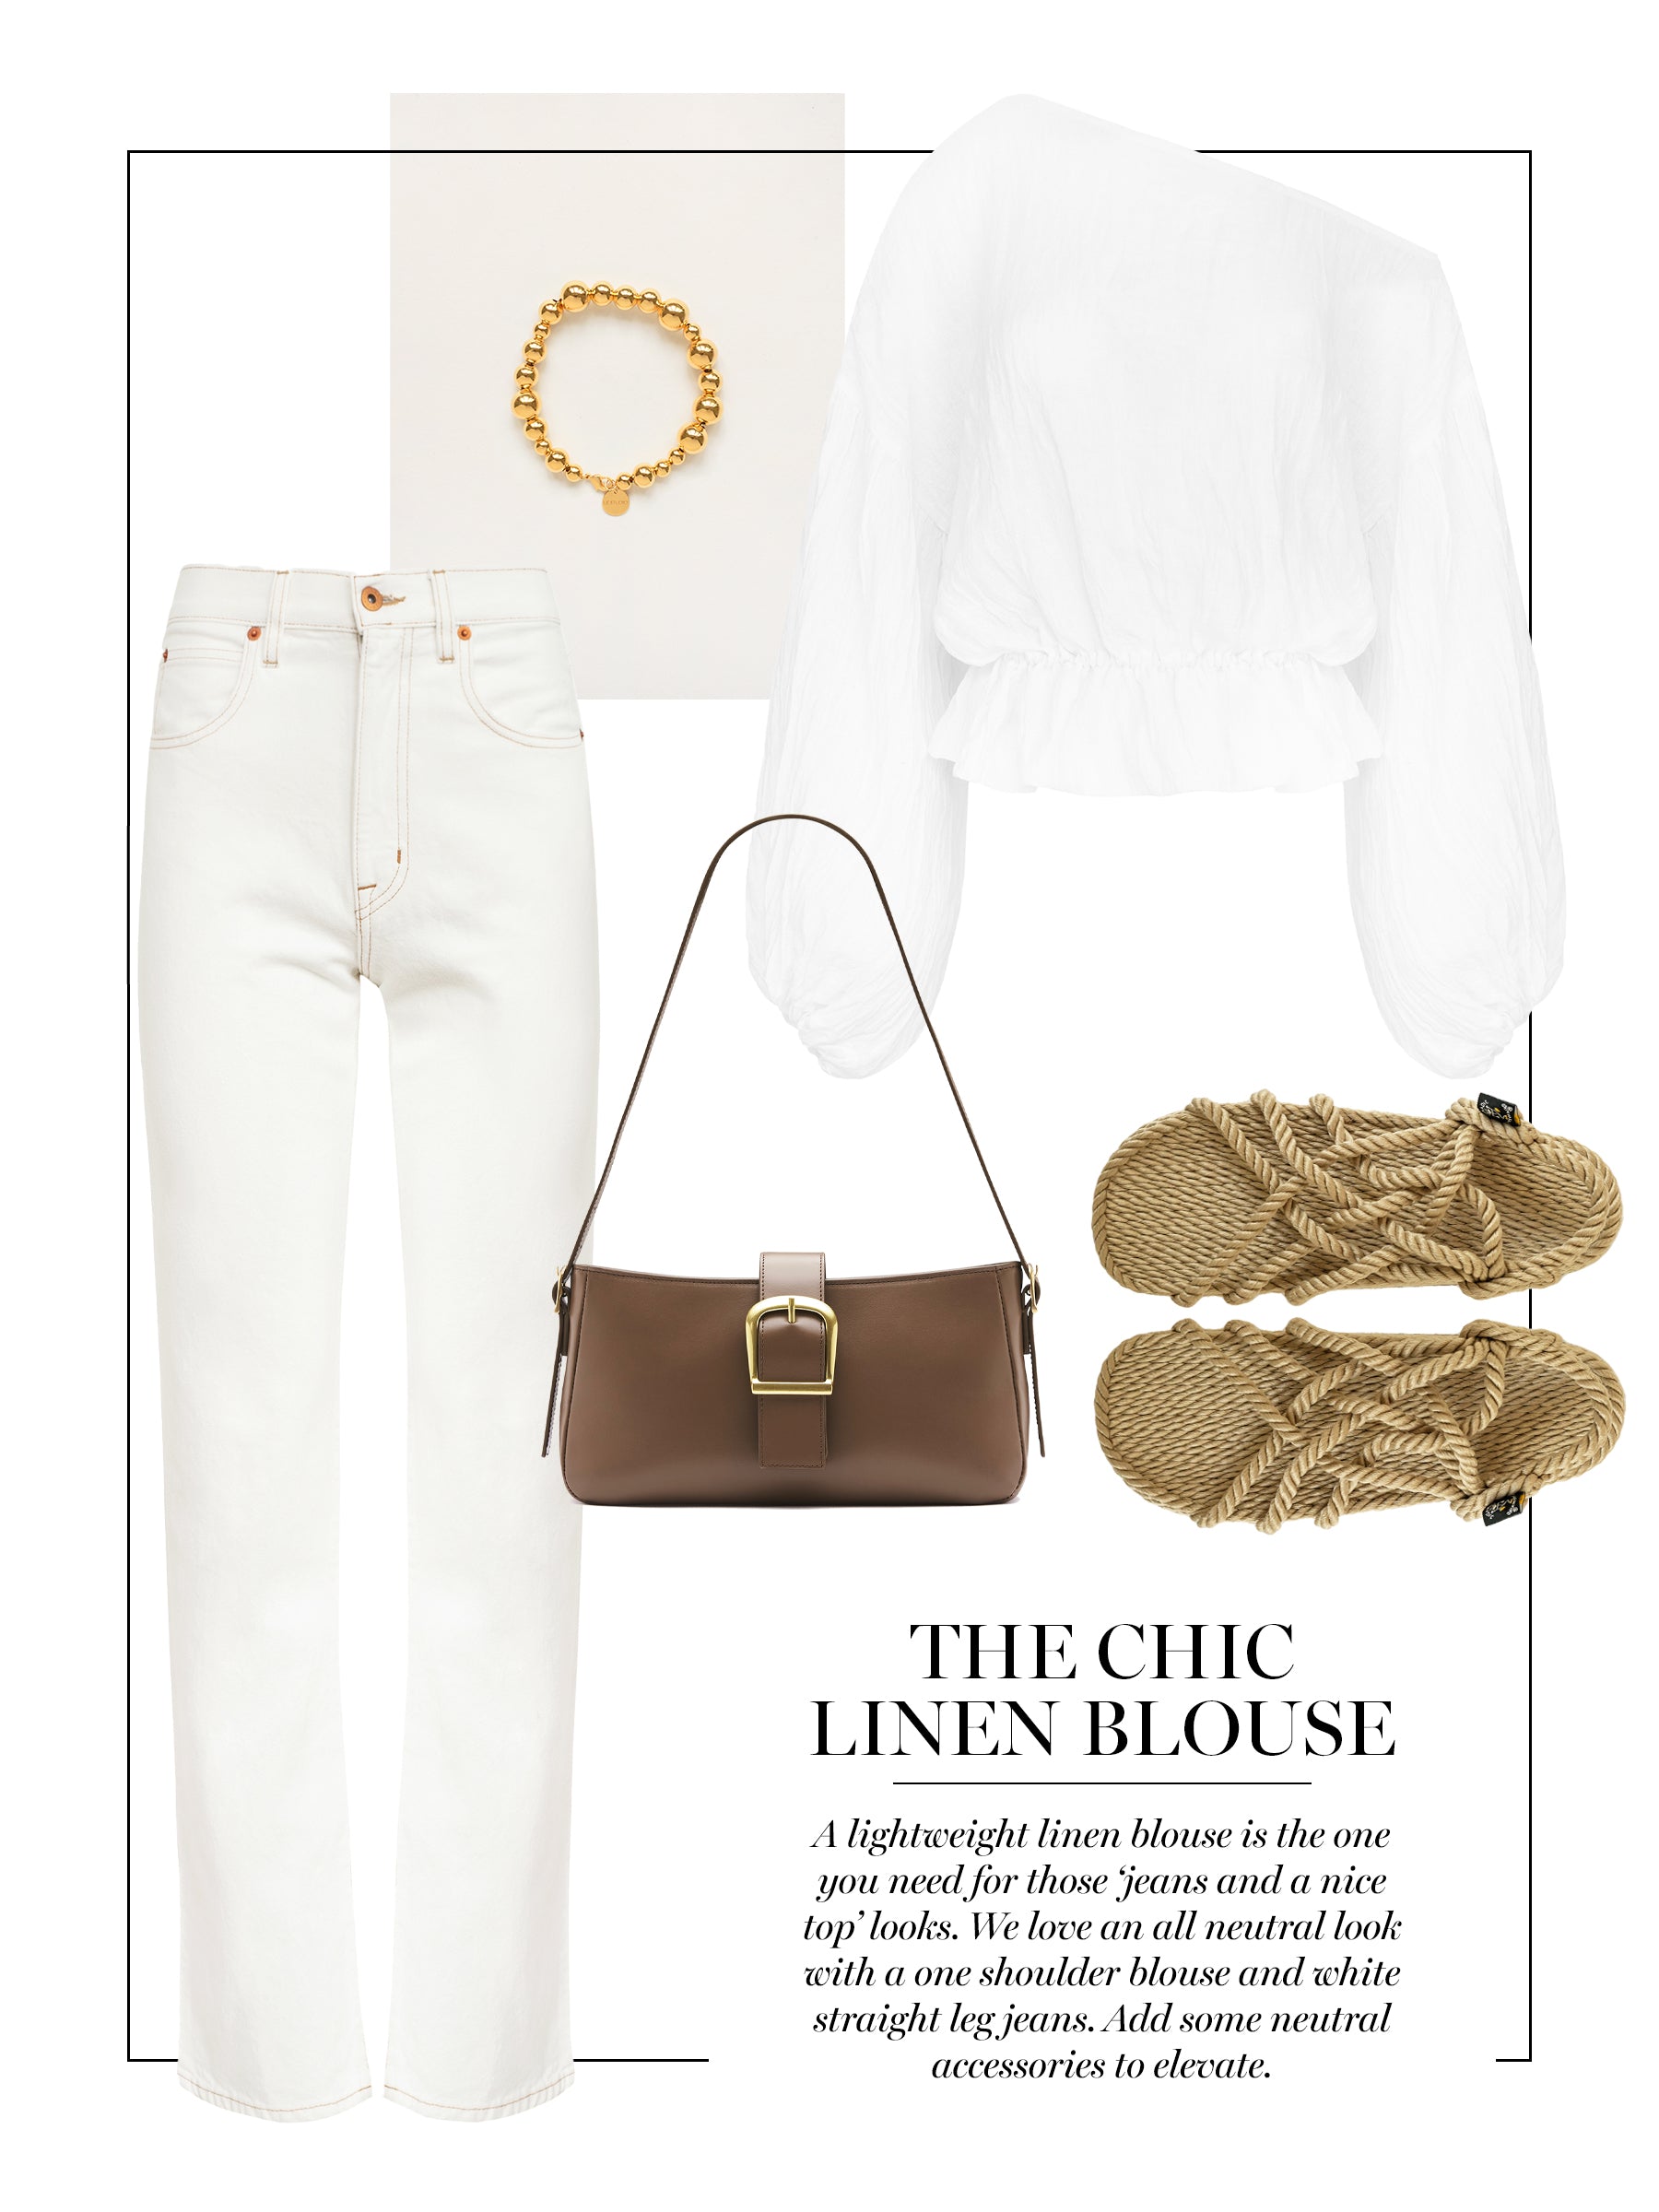 The chic linen blouse